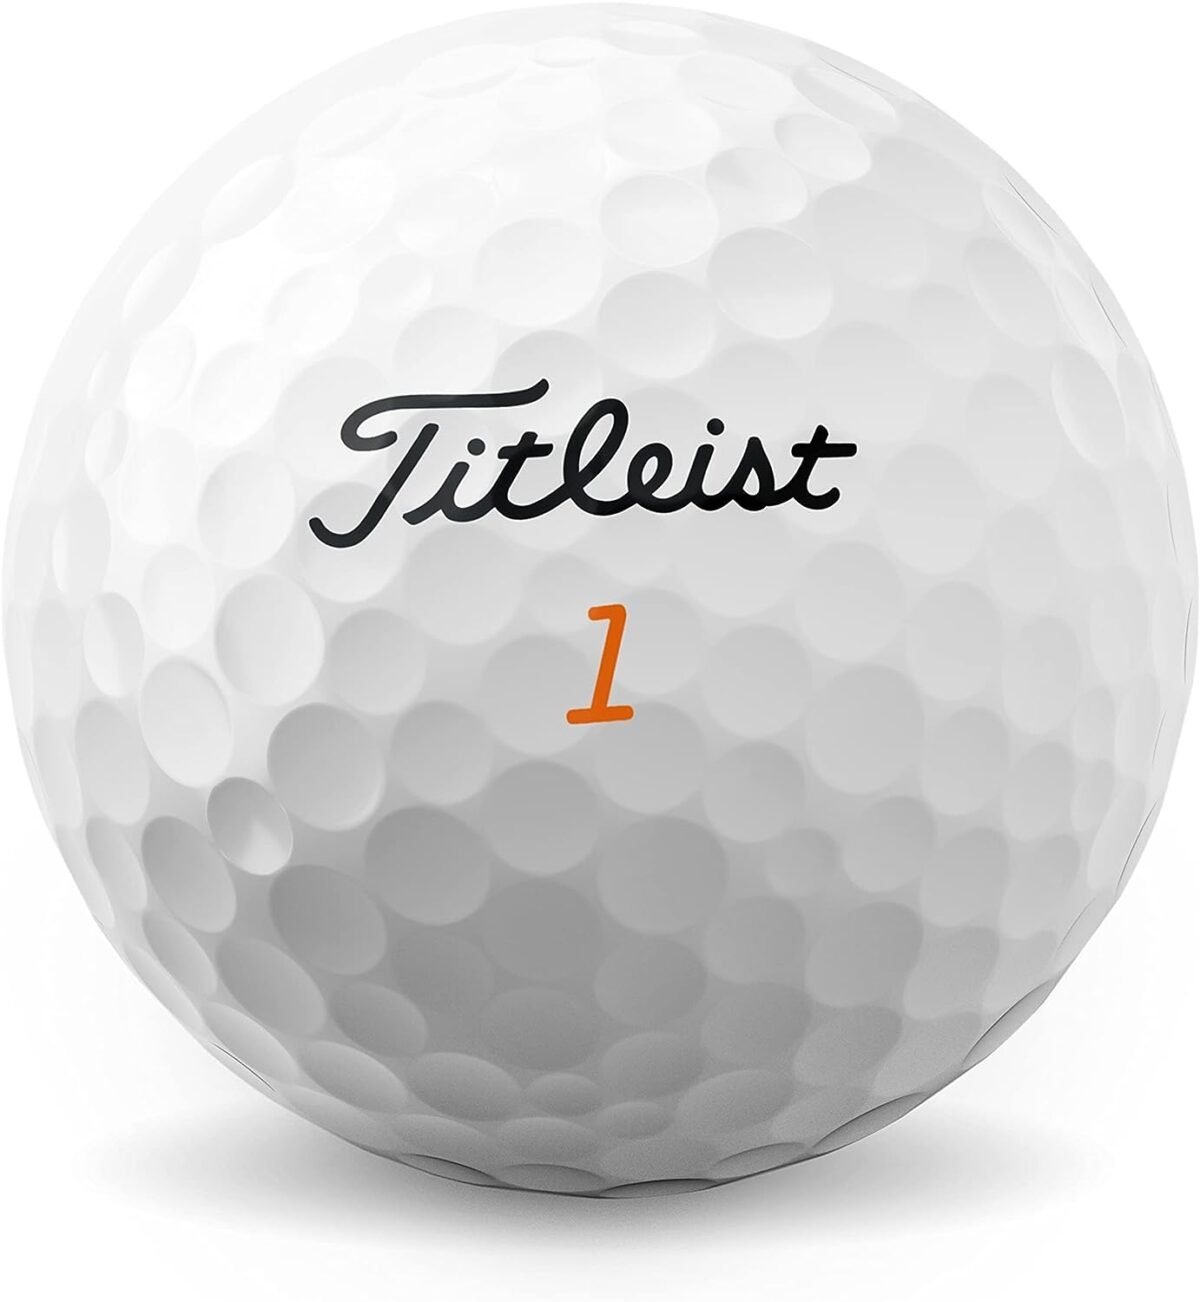 Golf Ball Review: Titleist Velocity vs Srixon Q-Star Tour Divide vs Callaway Supersoft vs Titleist Pro V1x vs Titleist Velocity (Pack of 12)